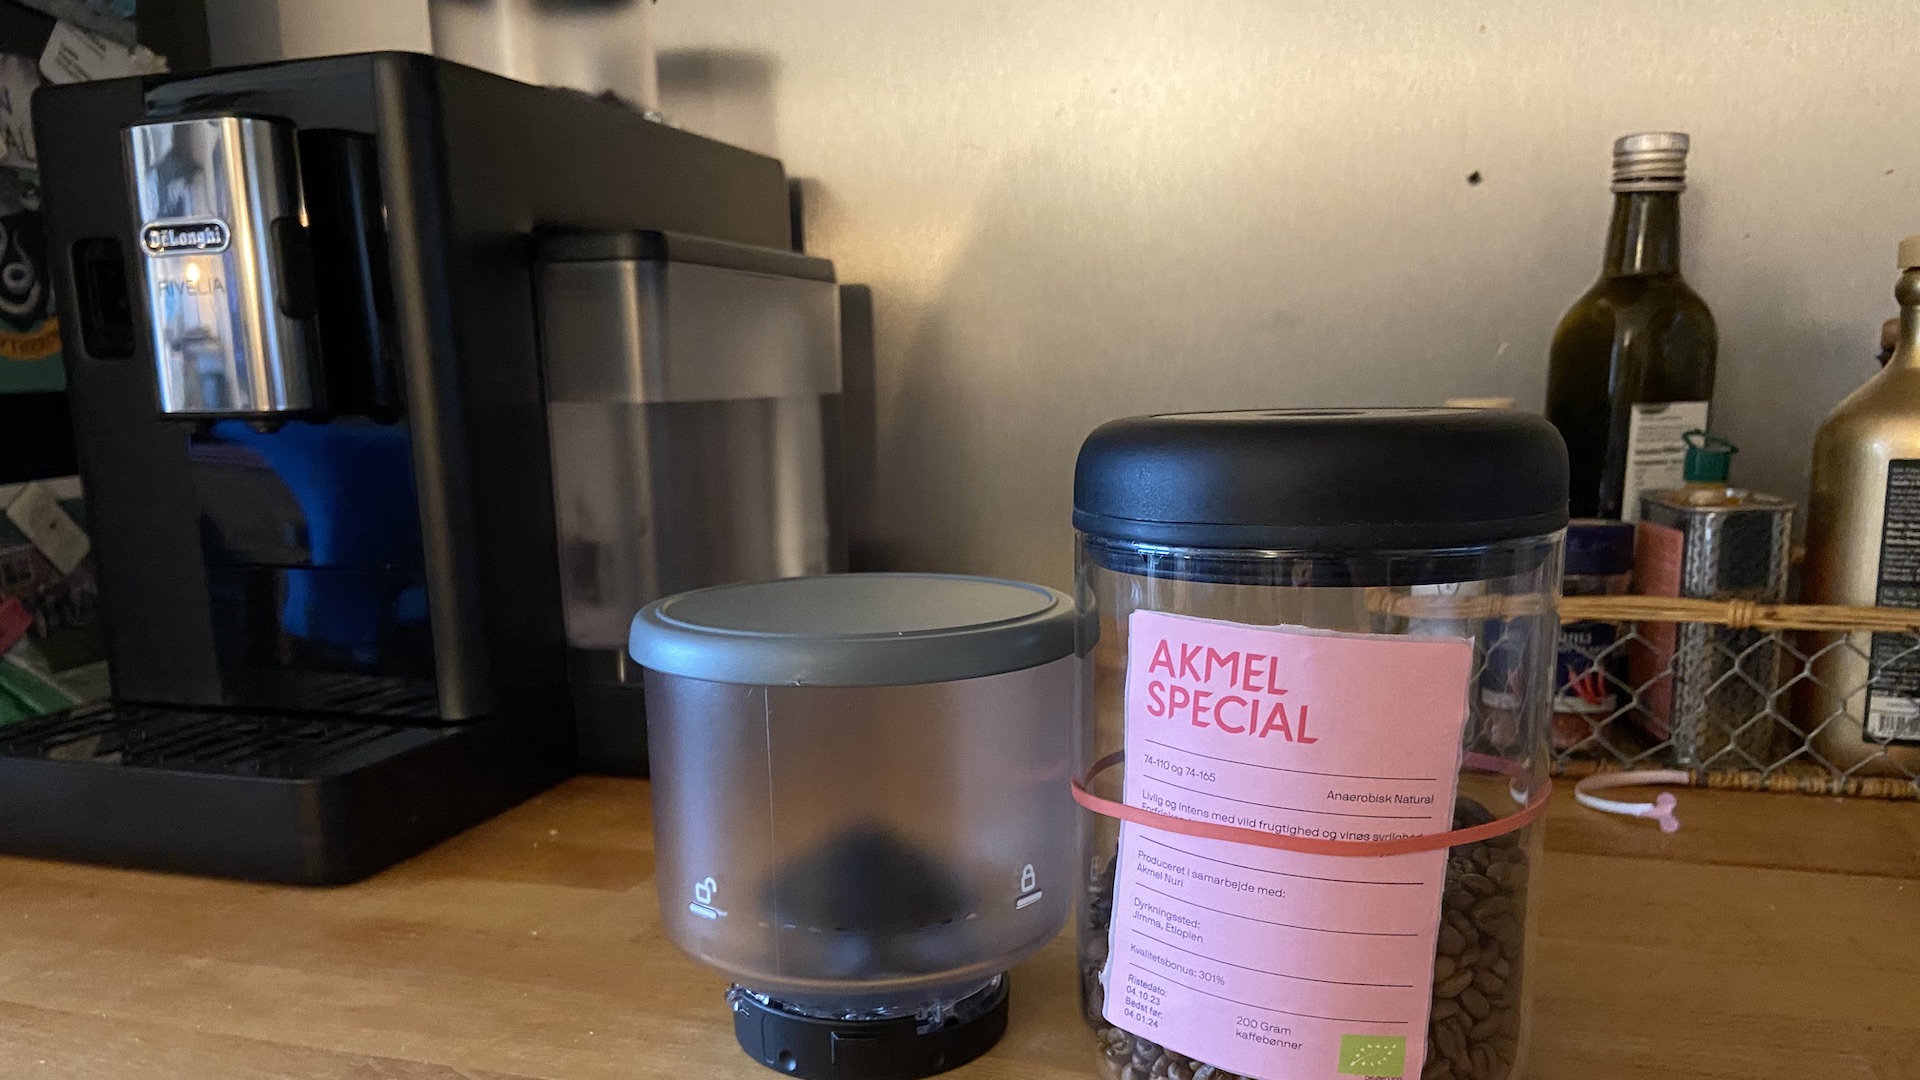 I tested the De'Longhi Rivelia luxury coffee machine and now I